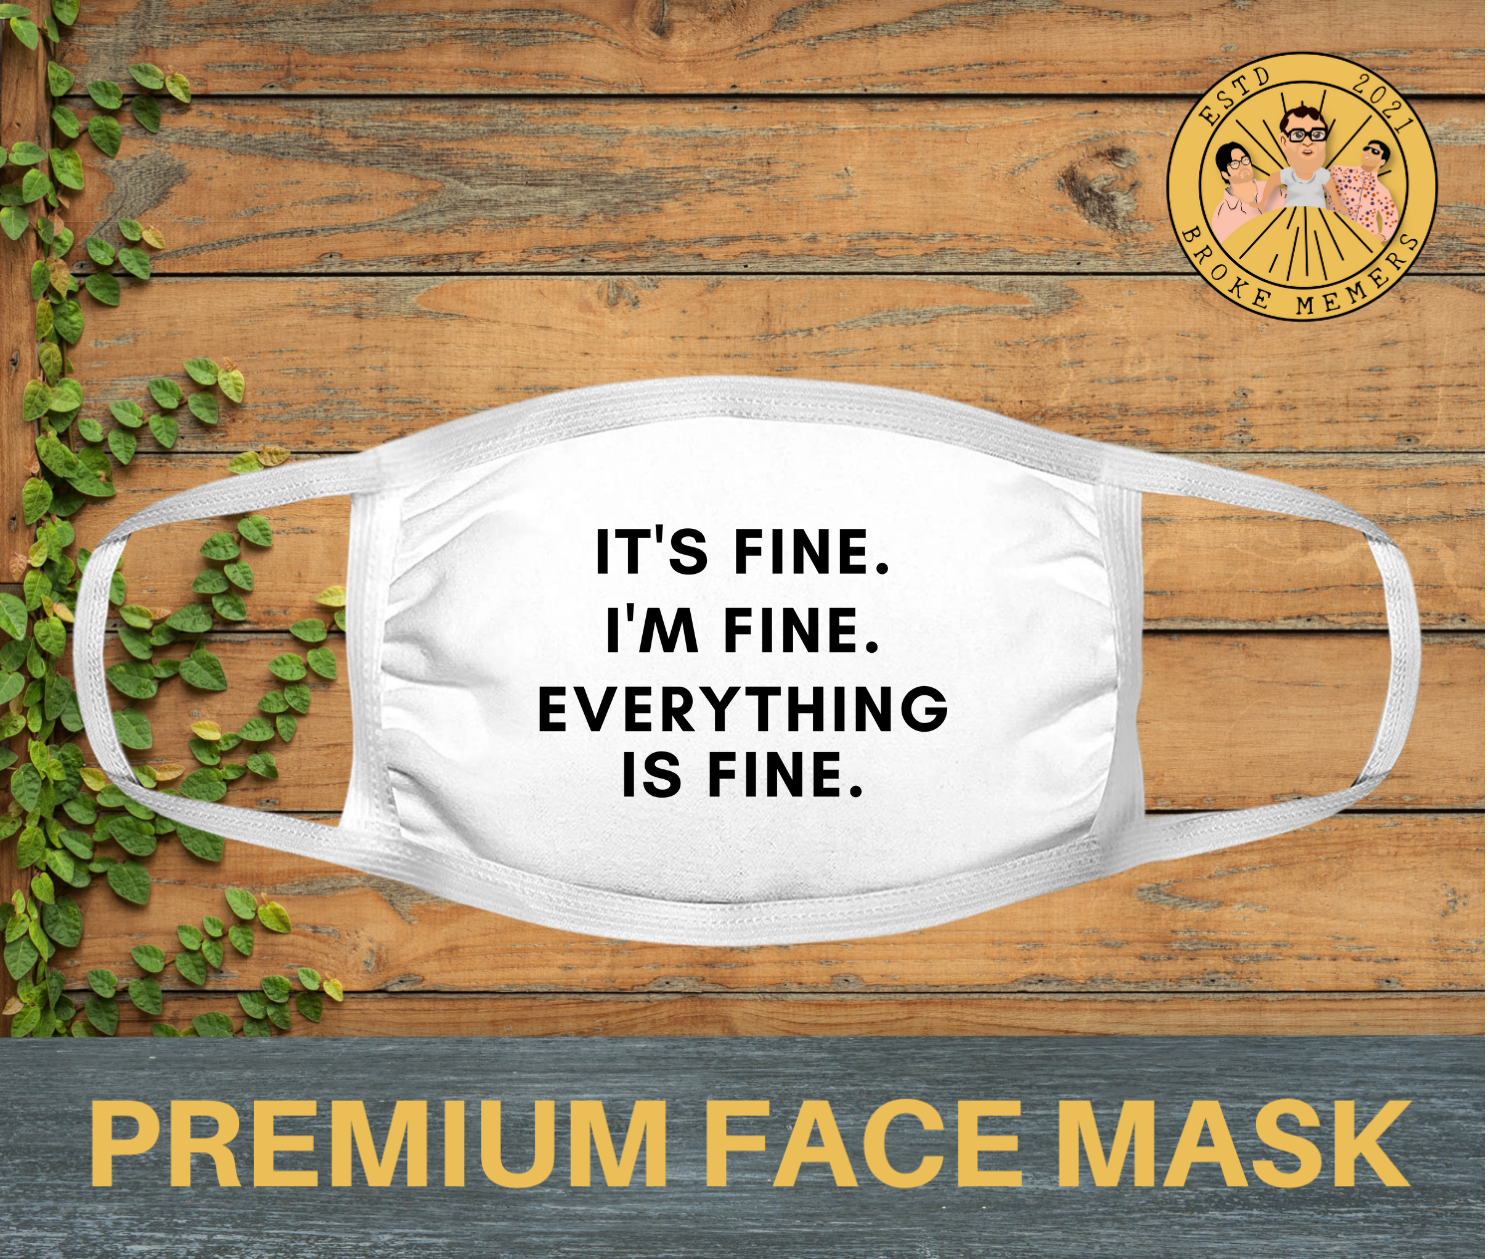 It's fine | Premium face mask